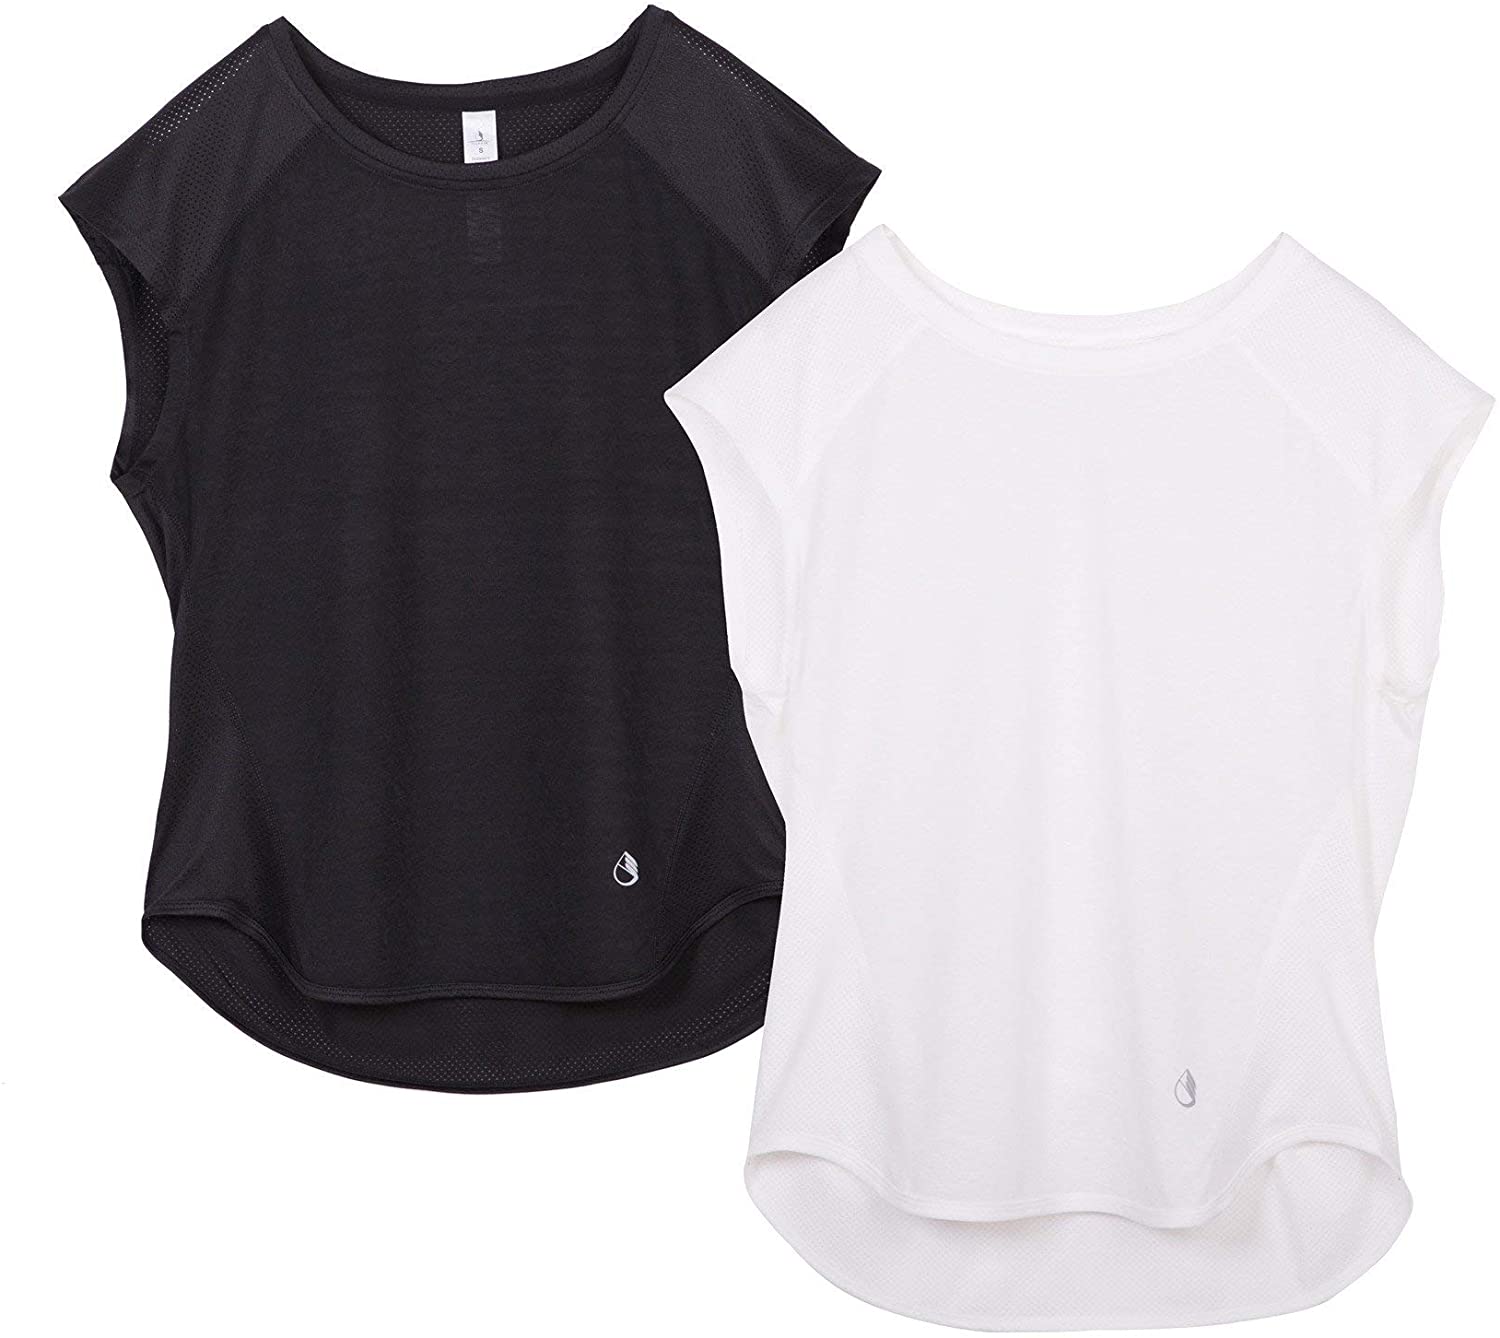 icyzone Workout T-Shirt for Women Gym Running Yoga Tops Athletic Shirts Raglan Short Sleeves 